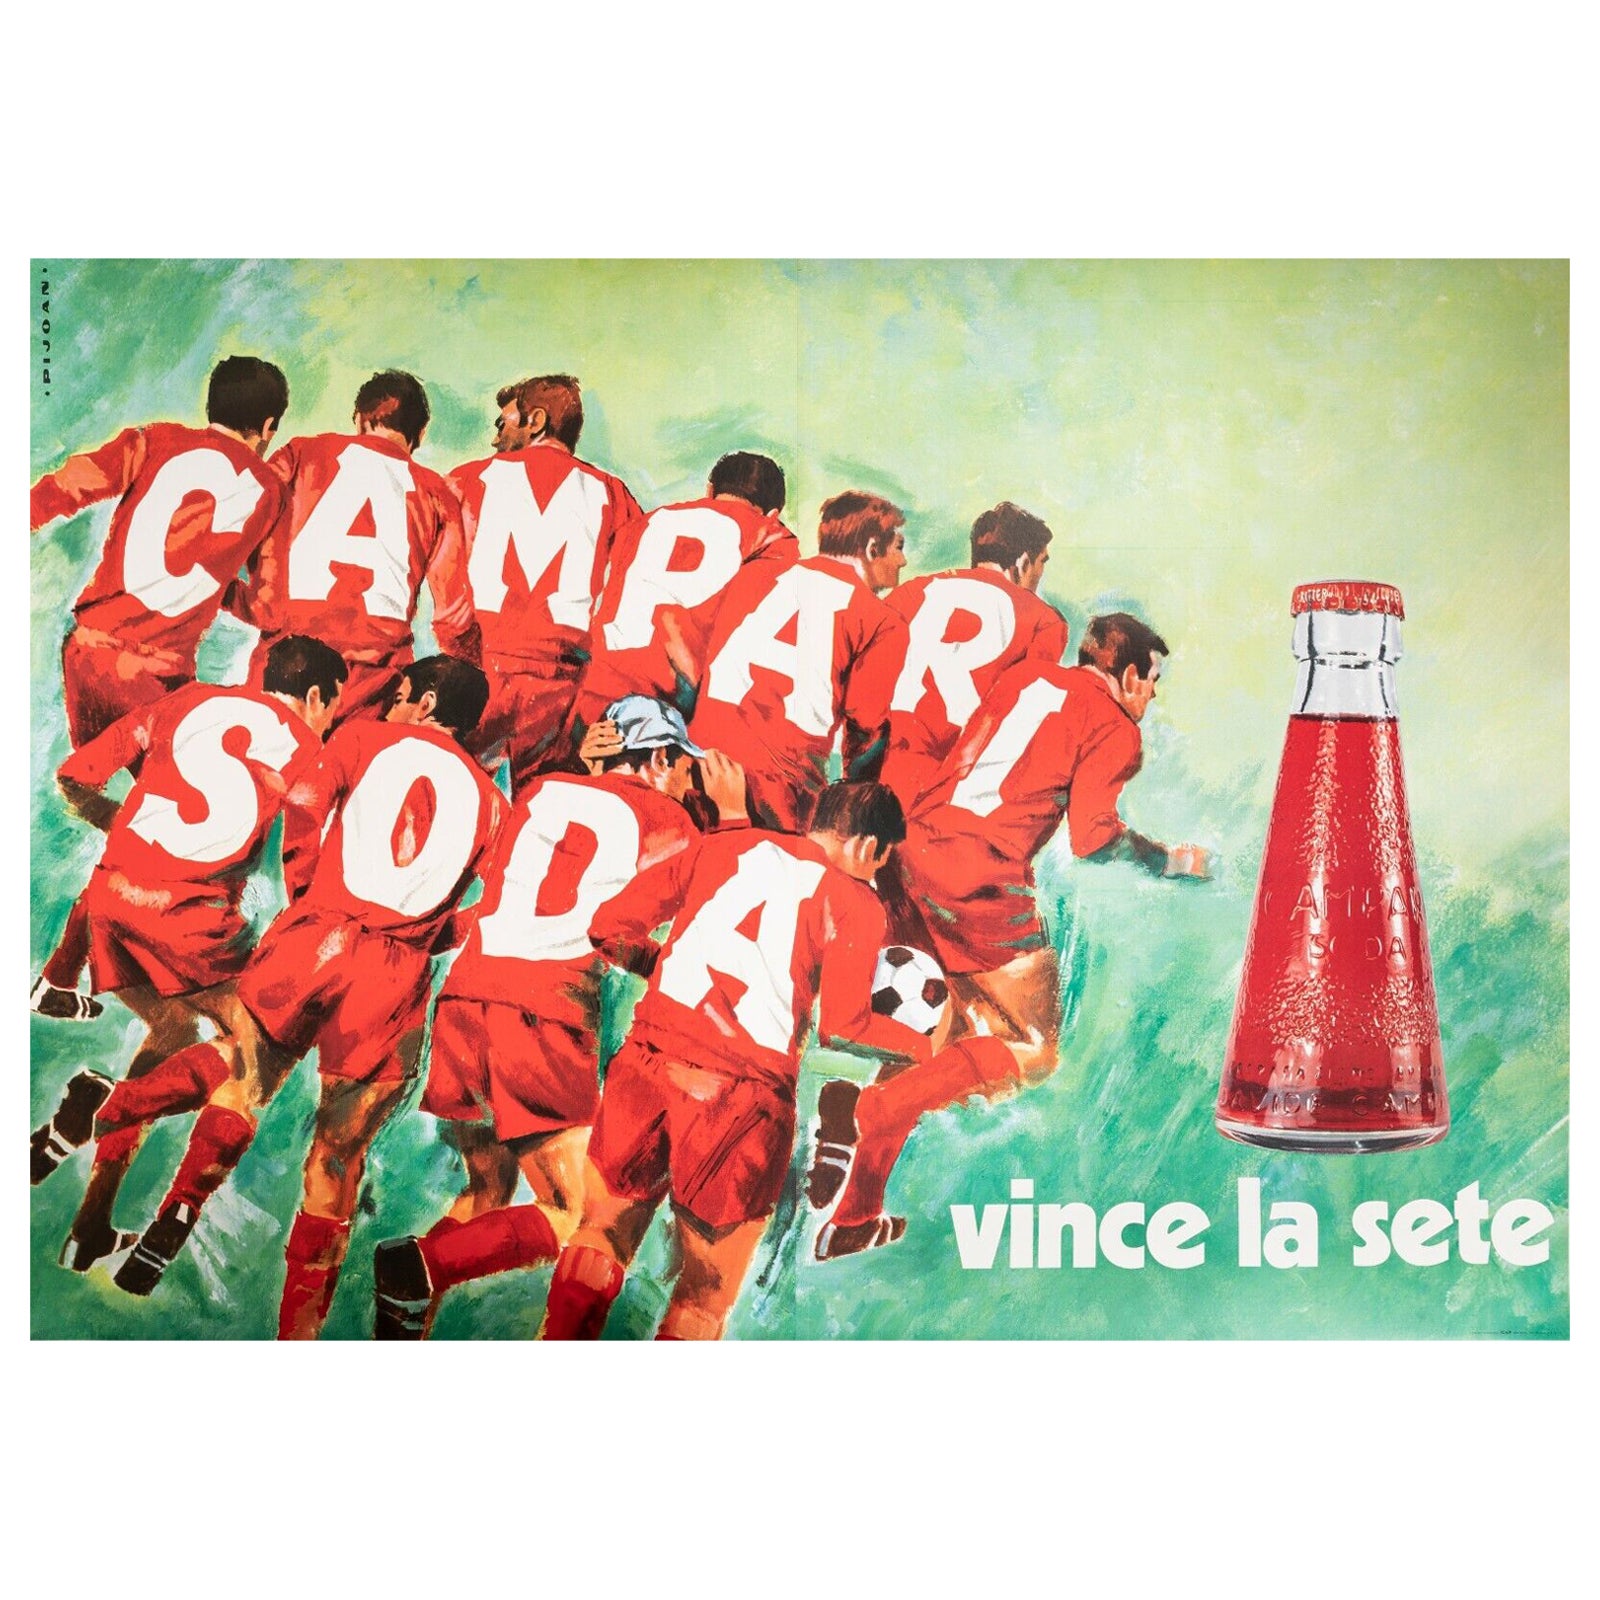 Original Vintage Poster-Pijoan-Campari Soda-Soccer-Liqueur, c.1970